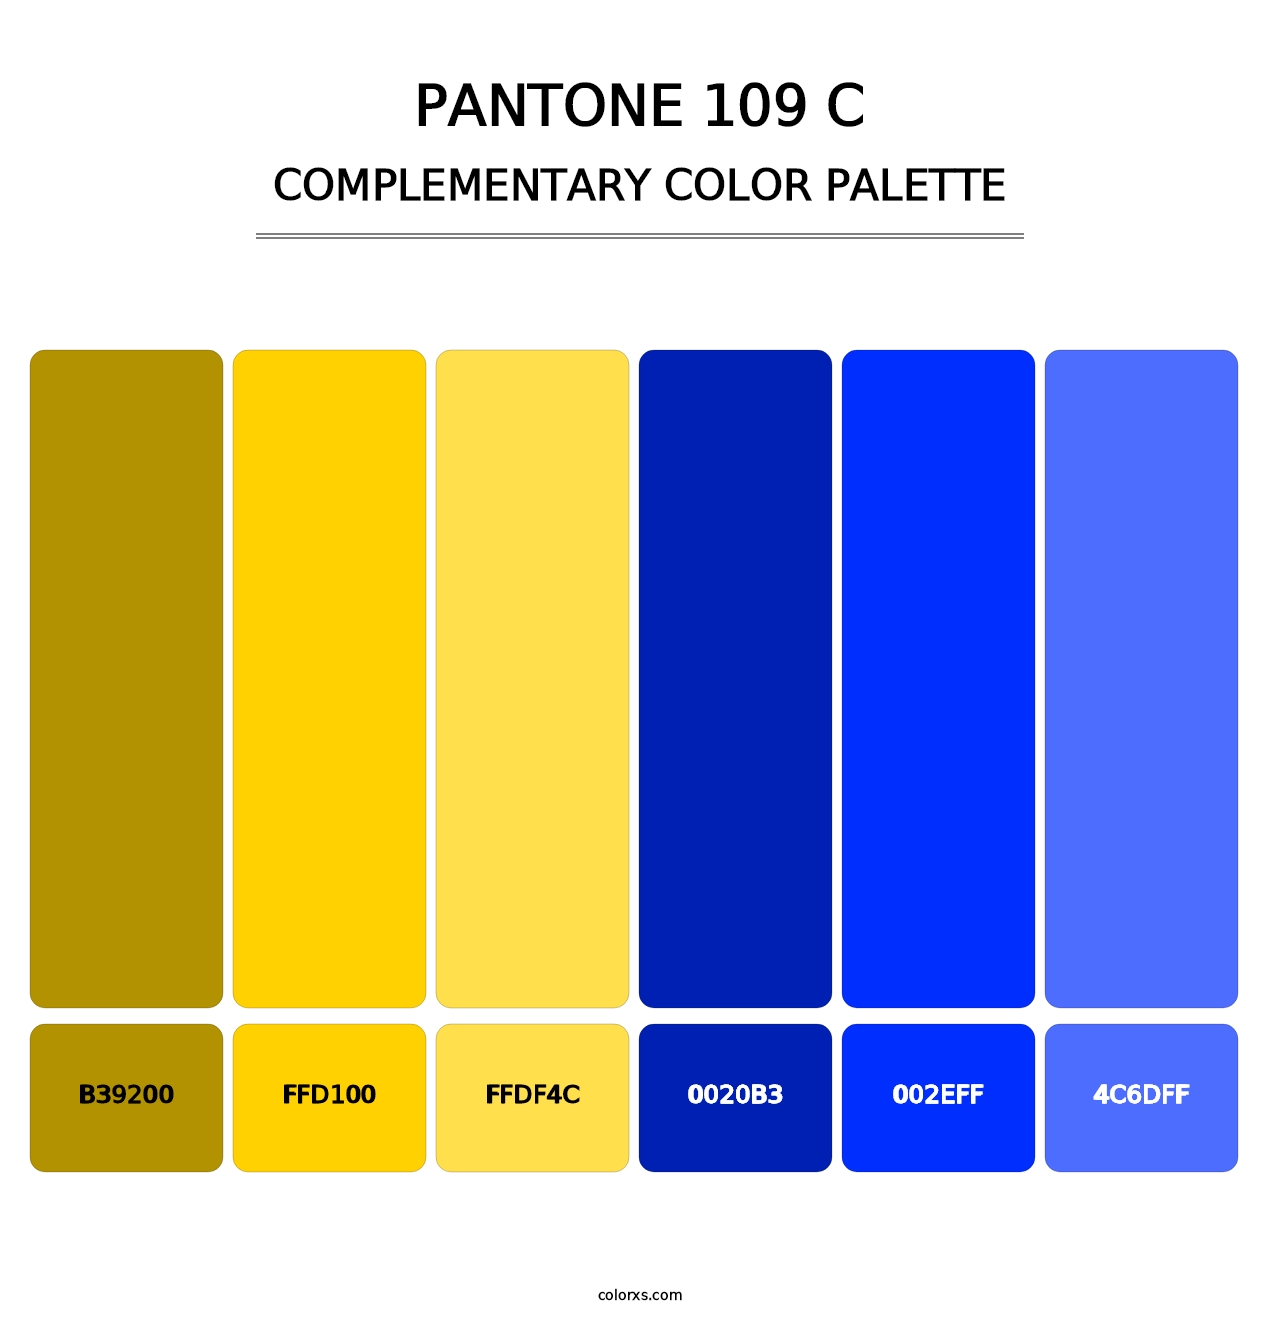 PANTONE 109 C - Complementary Color Palette